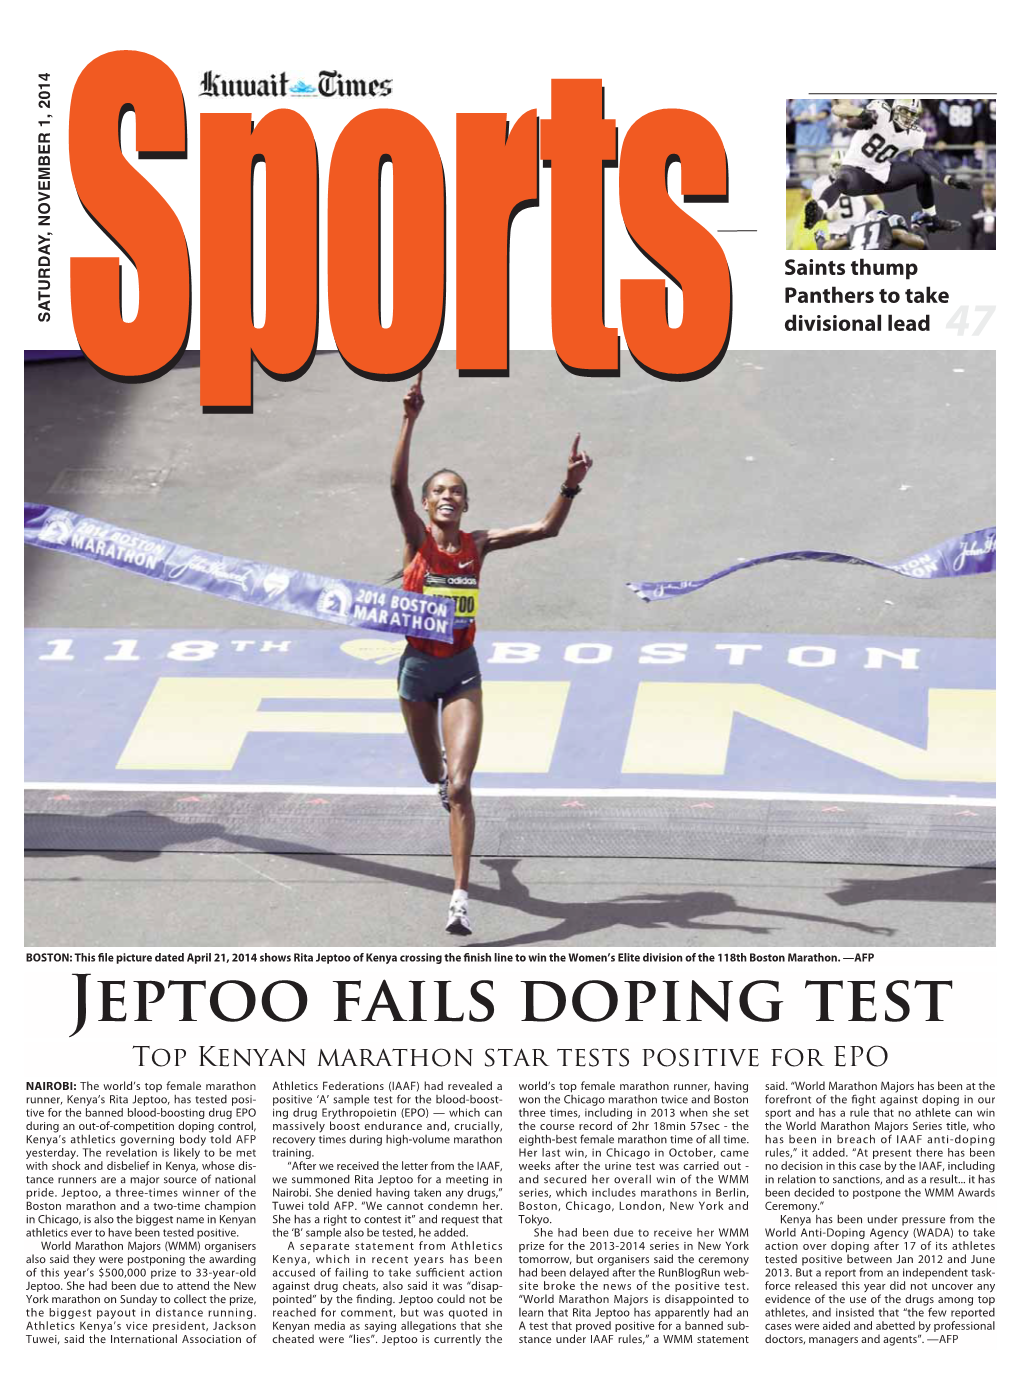 Jeptoo Fails Doping Test Top Kenyan Marathon Star Tests Positive for EPO